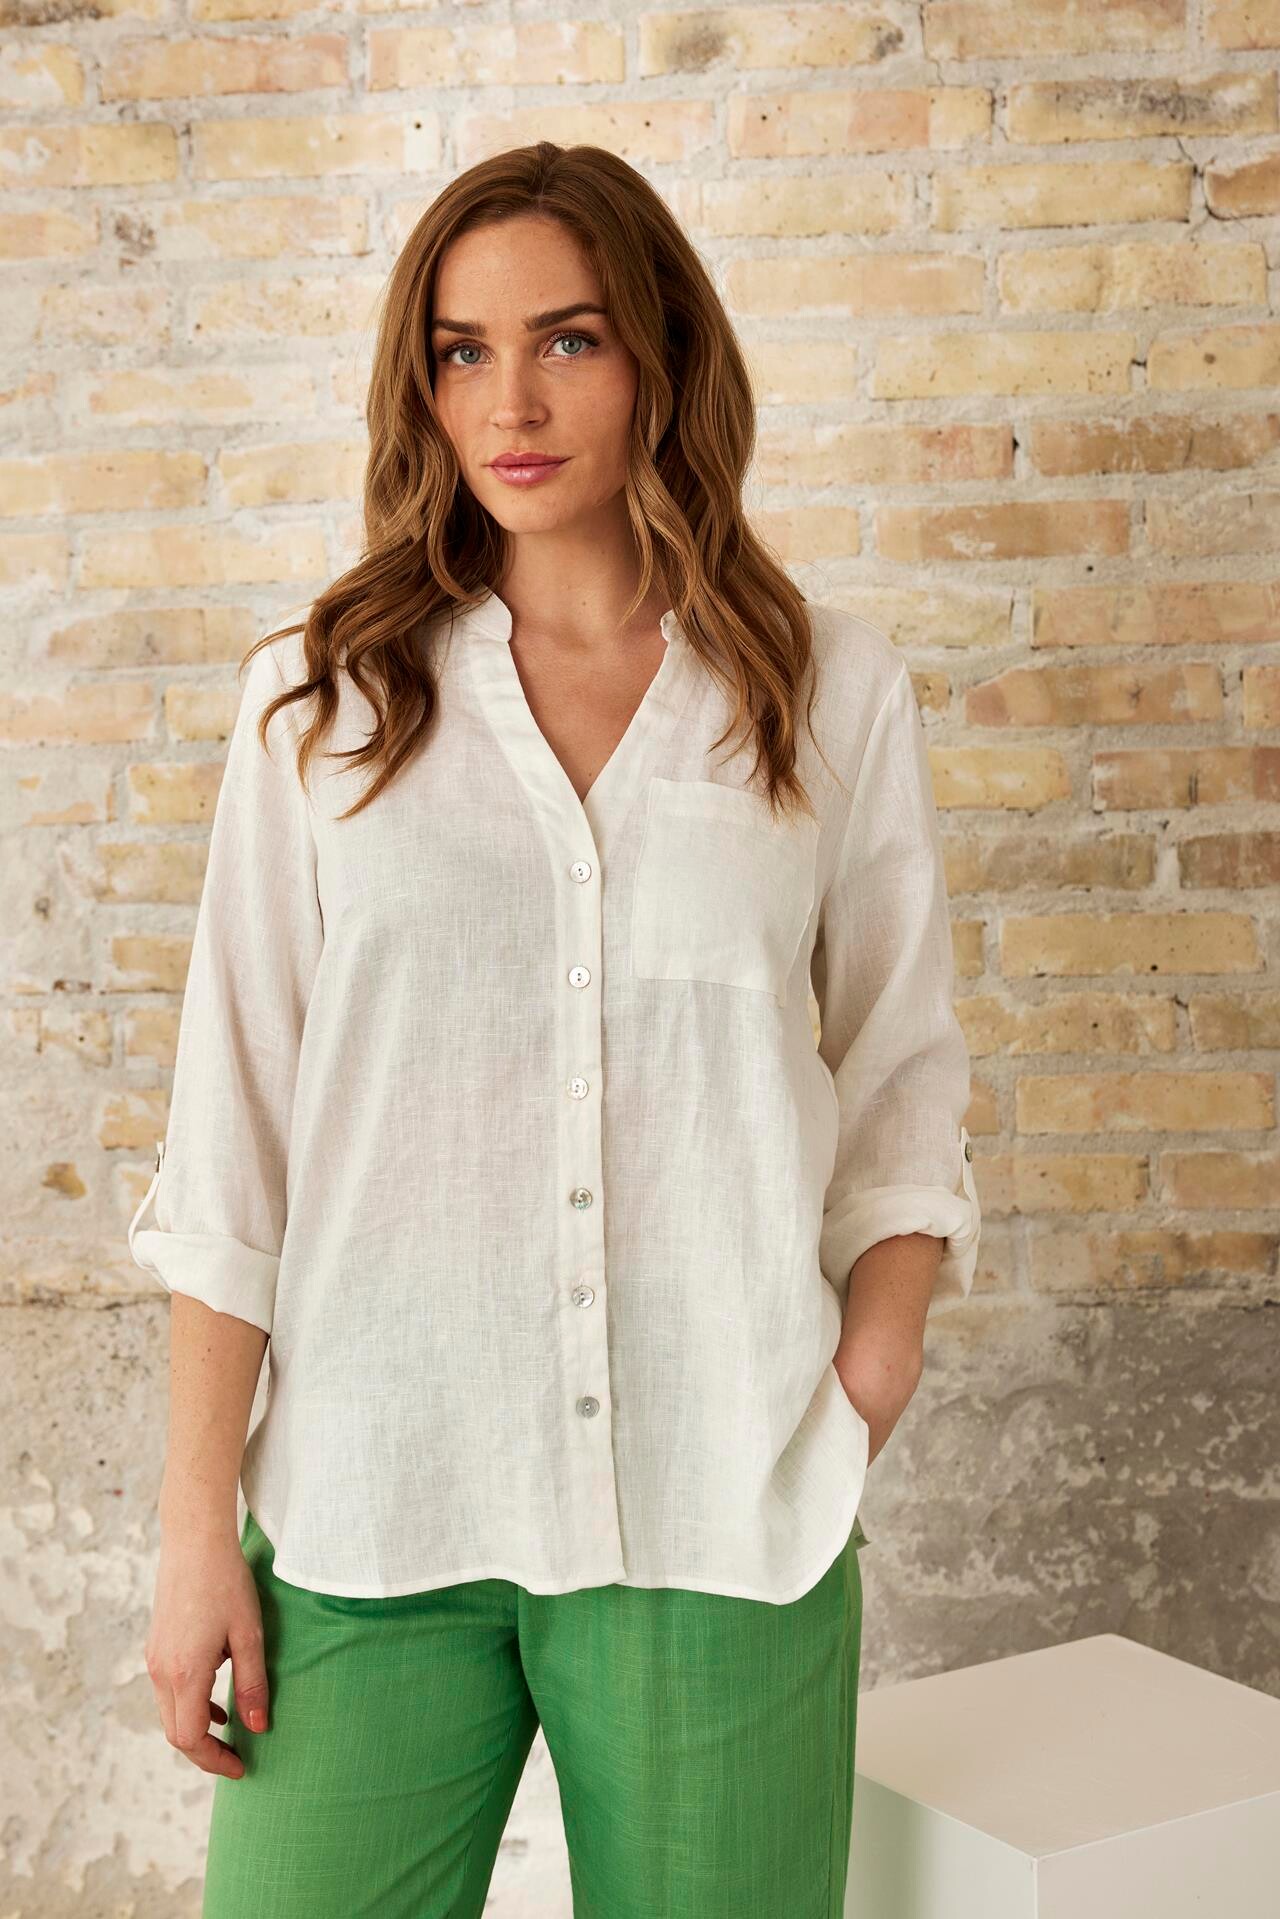 Se IN FRONT Linea Skjorte, Farve: Off White, Størrelse: XL, Dame hos Infront Women